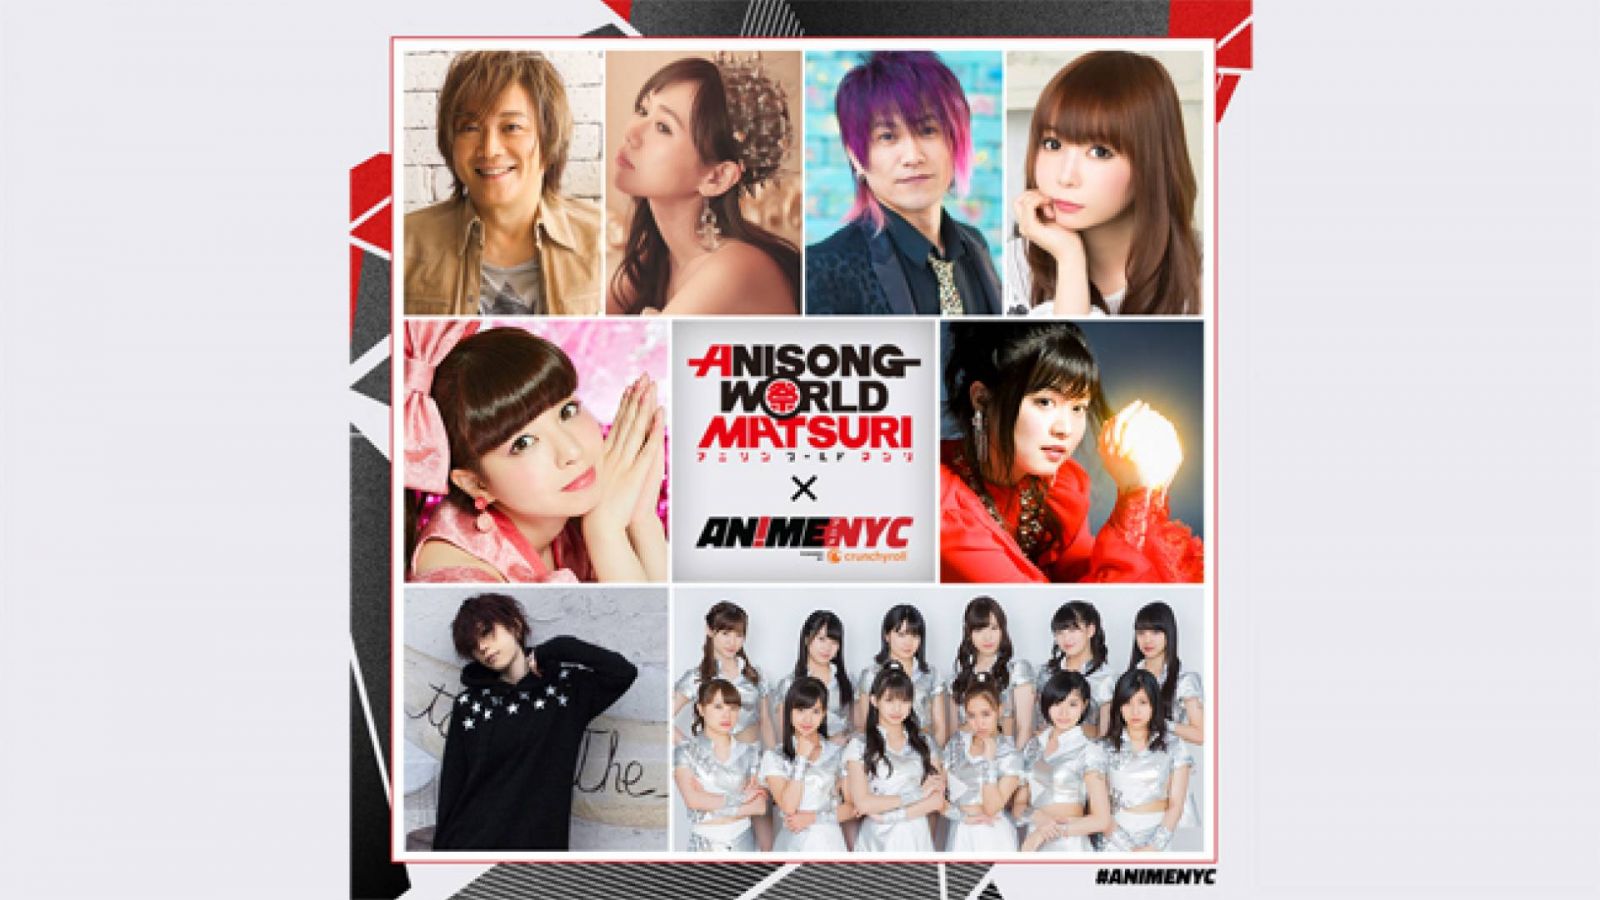 Anime NYC 2018 Reveals Final Artist Lineup and Ticket Dates for Anisong World Matsuri © Anime NYC / Anisong World Matsuri